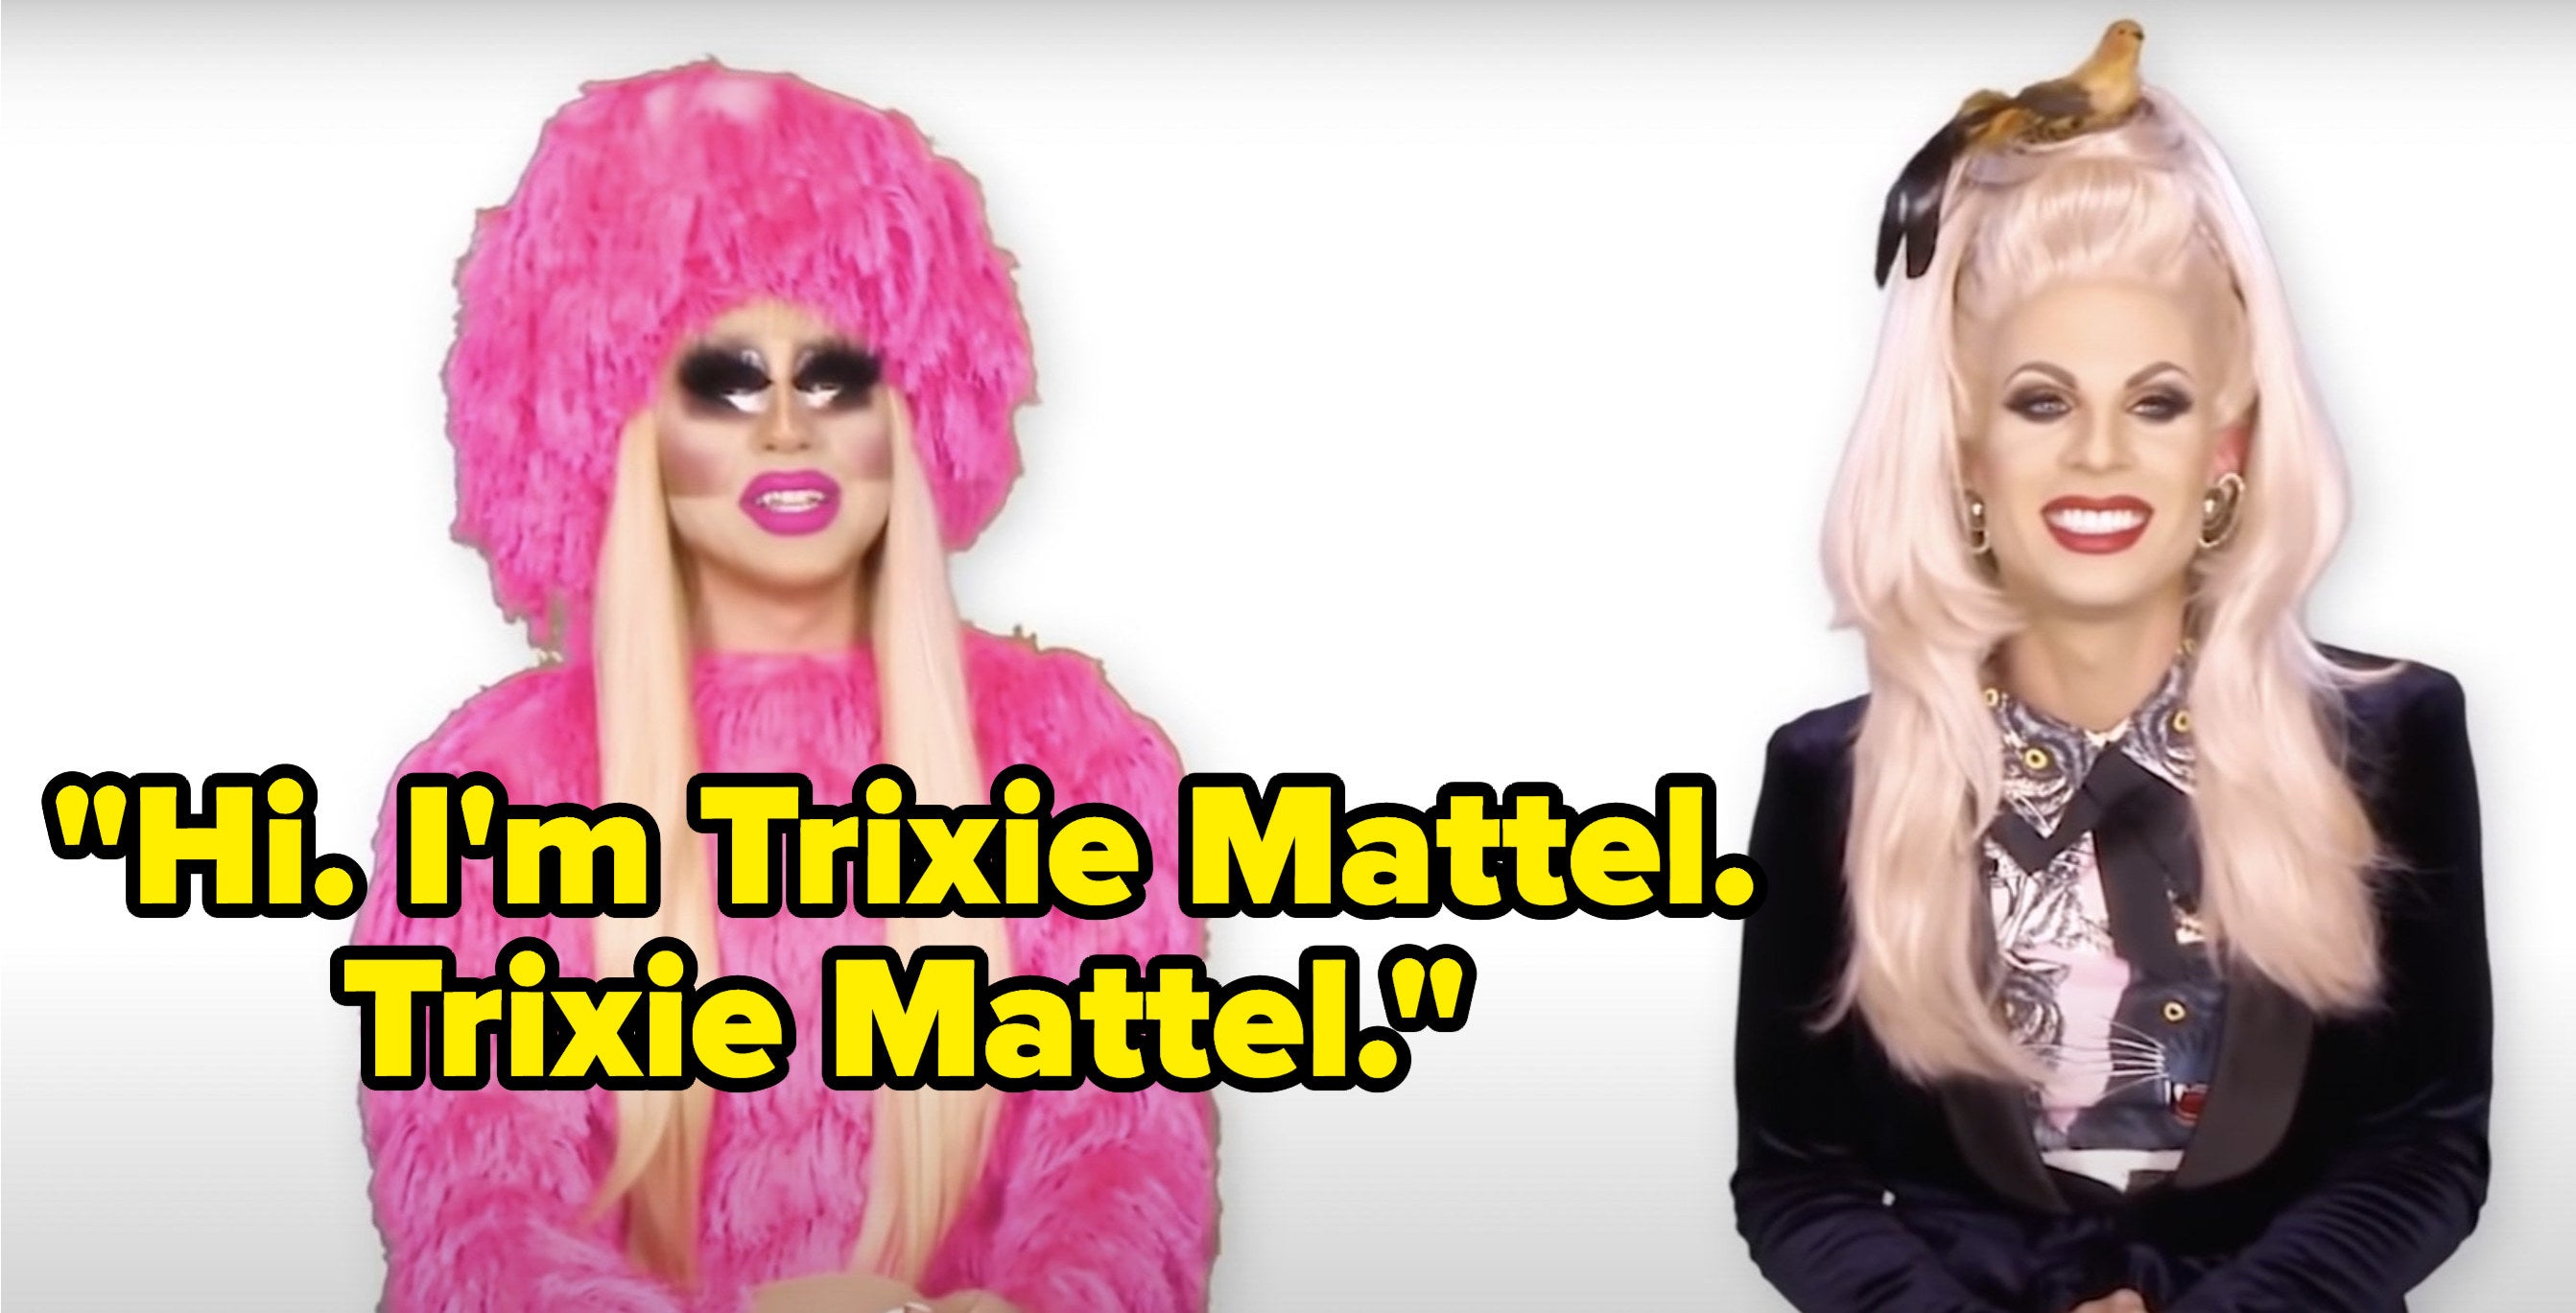 Trixie says, Hi, Im Trixie Mattel, Trixie Mattel